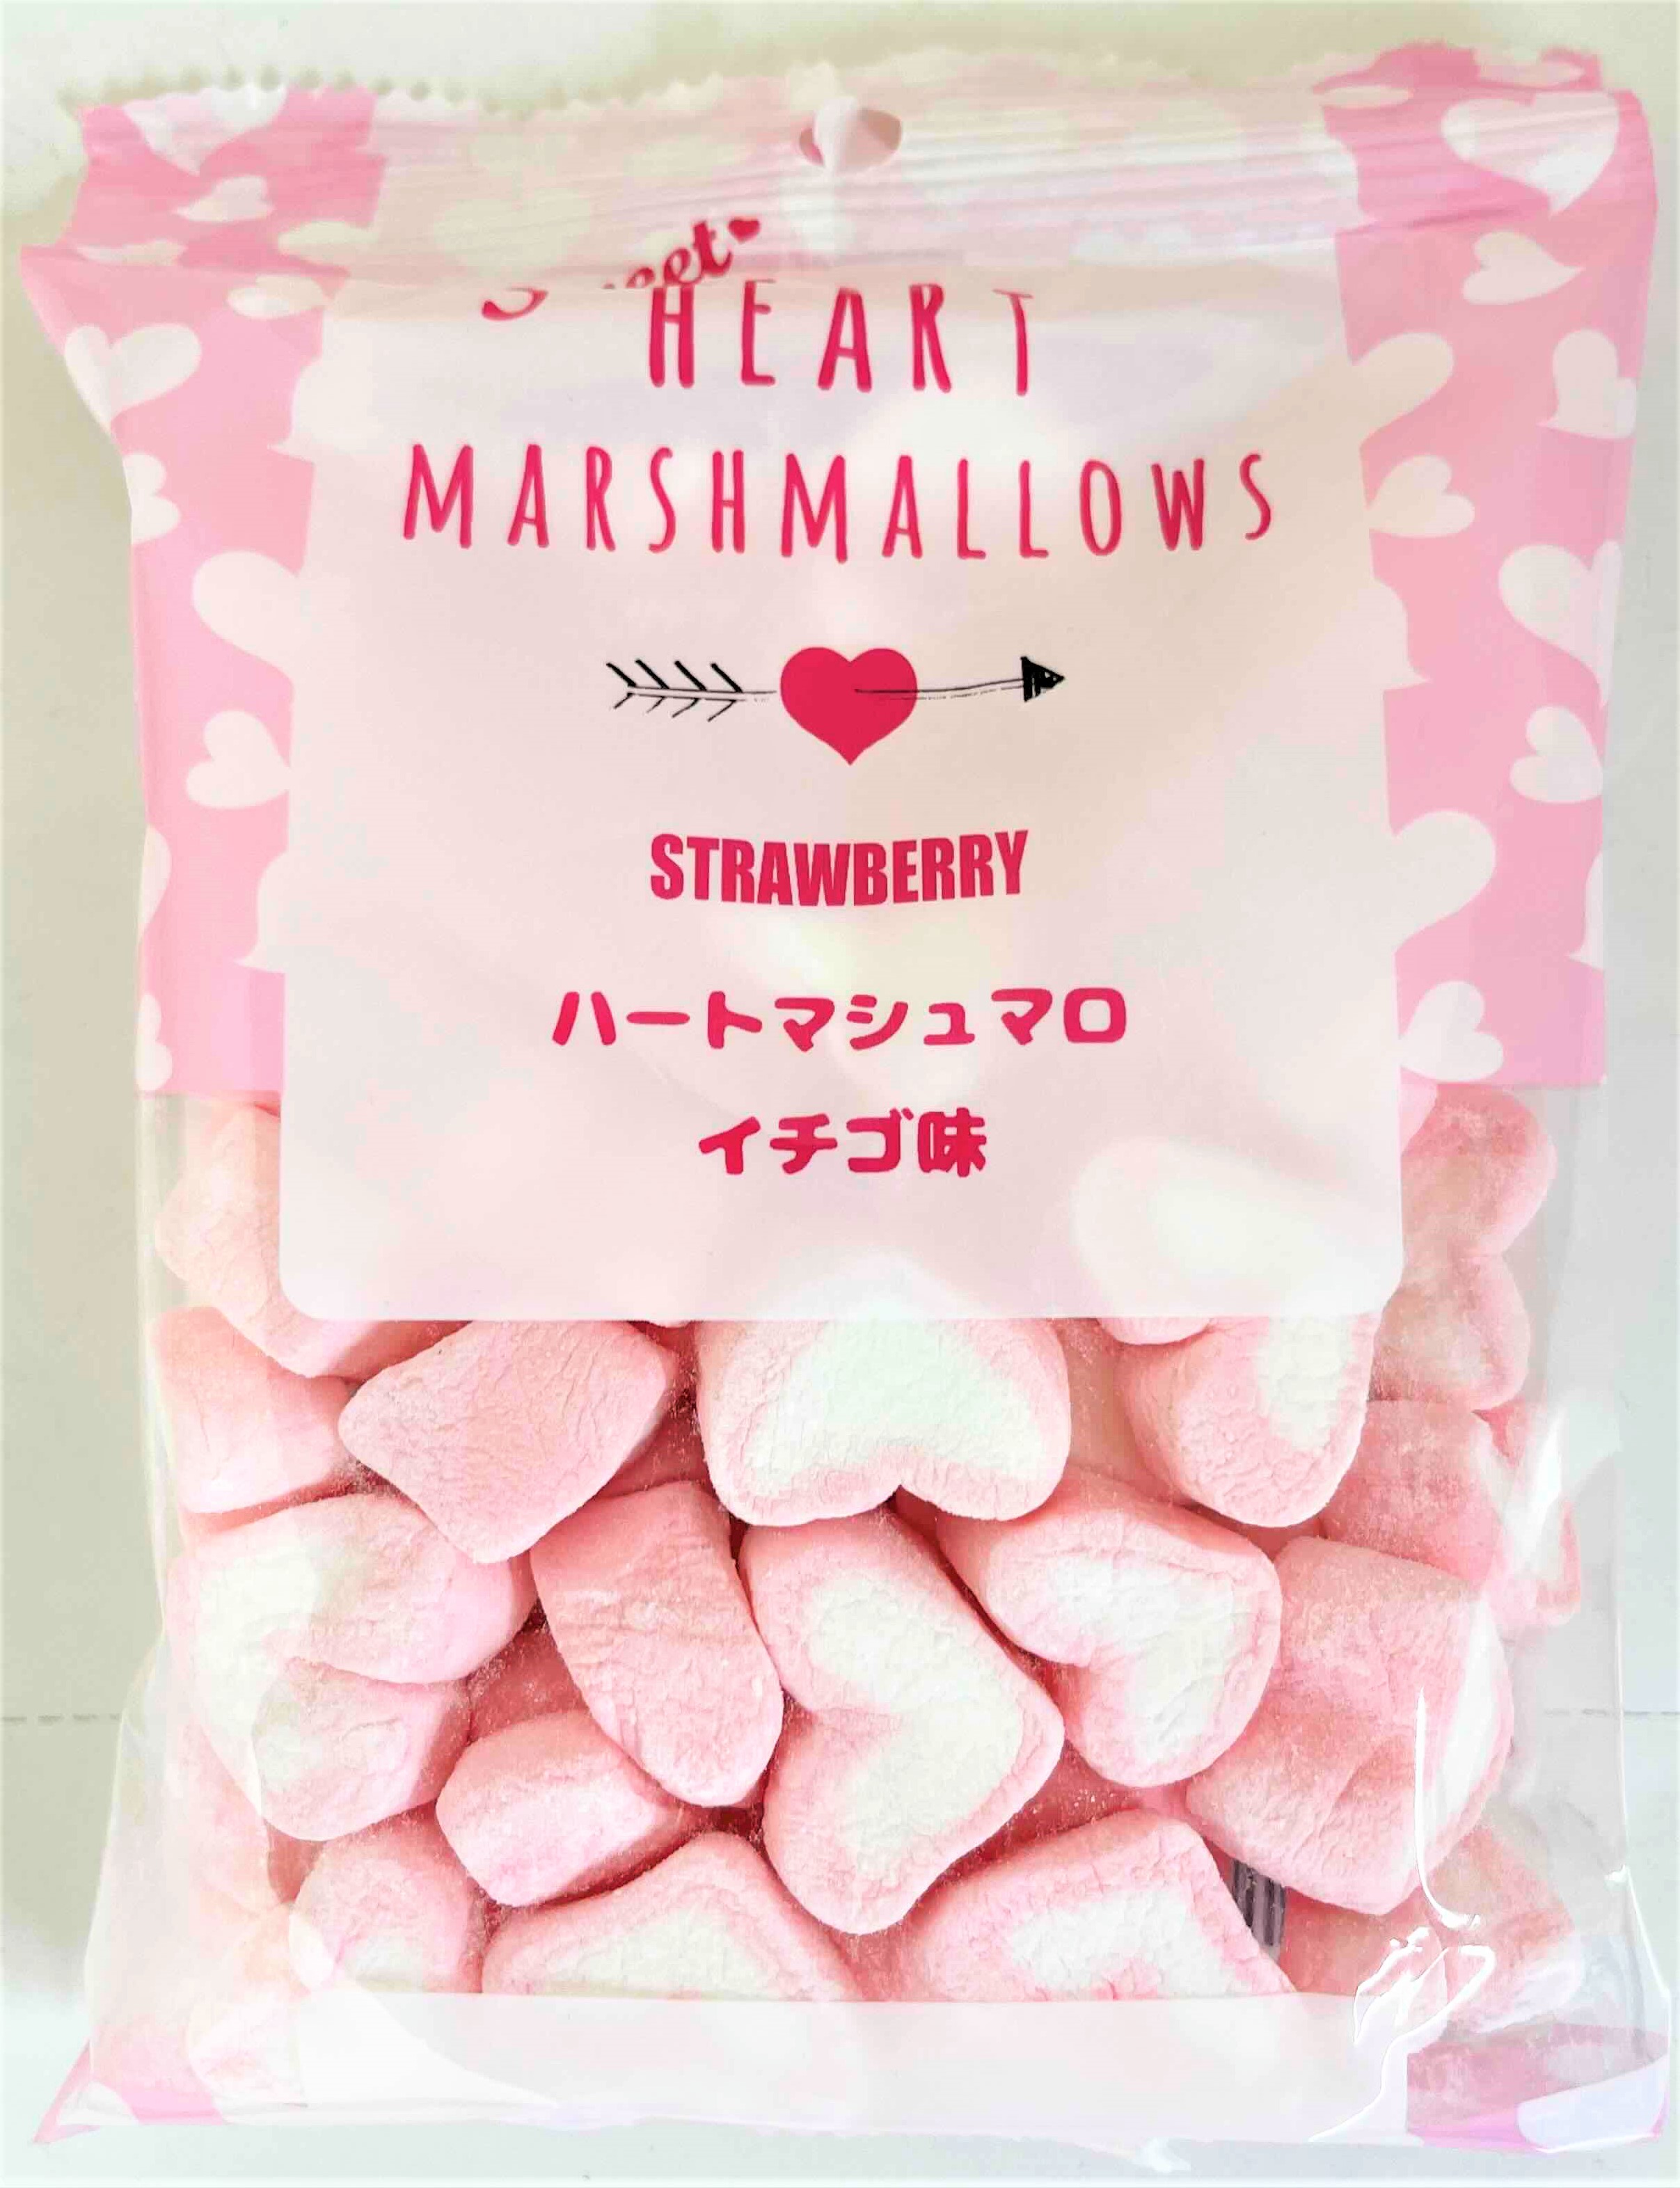  Heart marshmallow strawberry taste 65g go in ( stock )wisk[ country of origin : Philippines ]